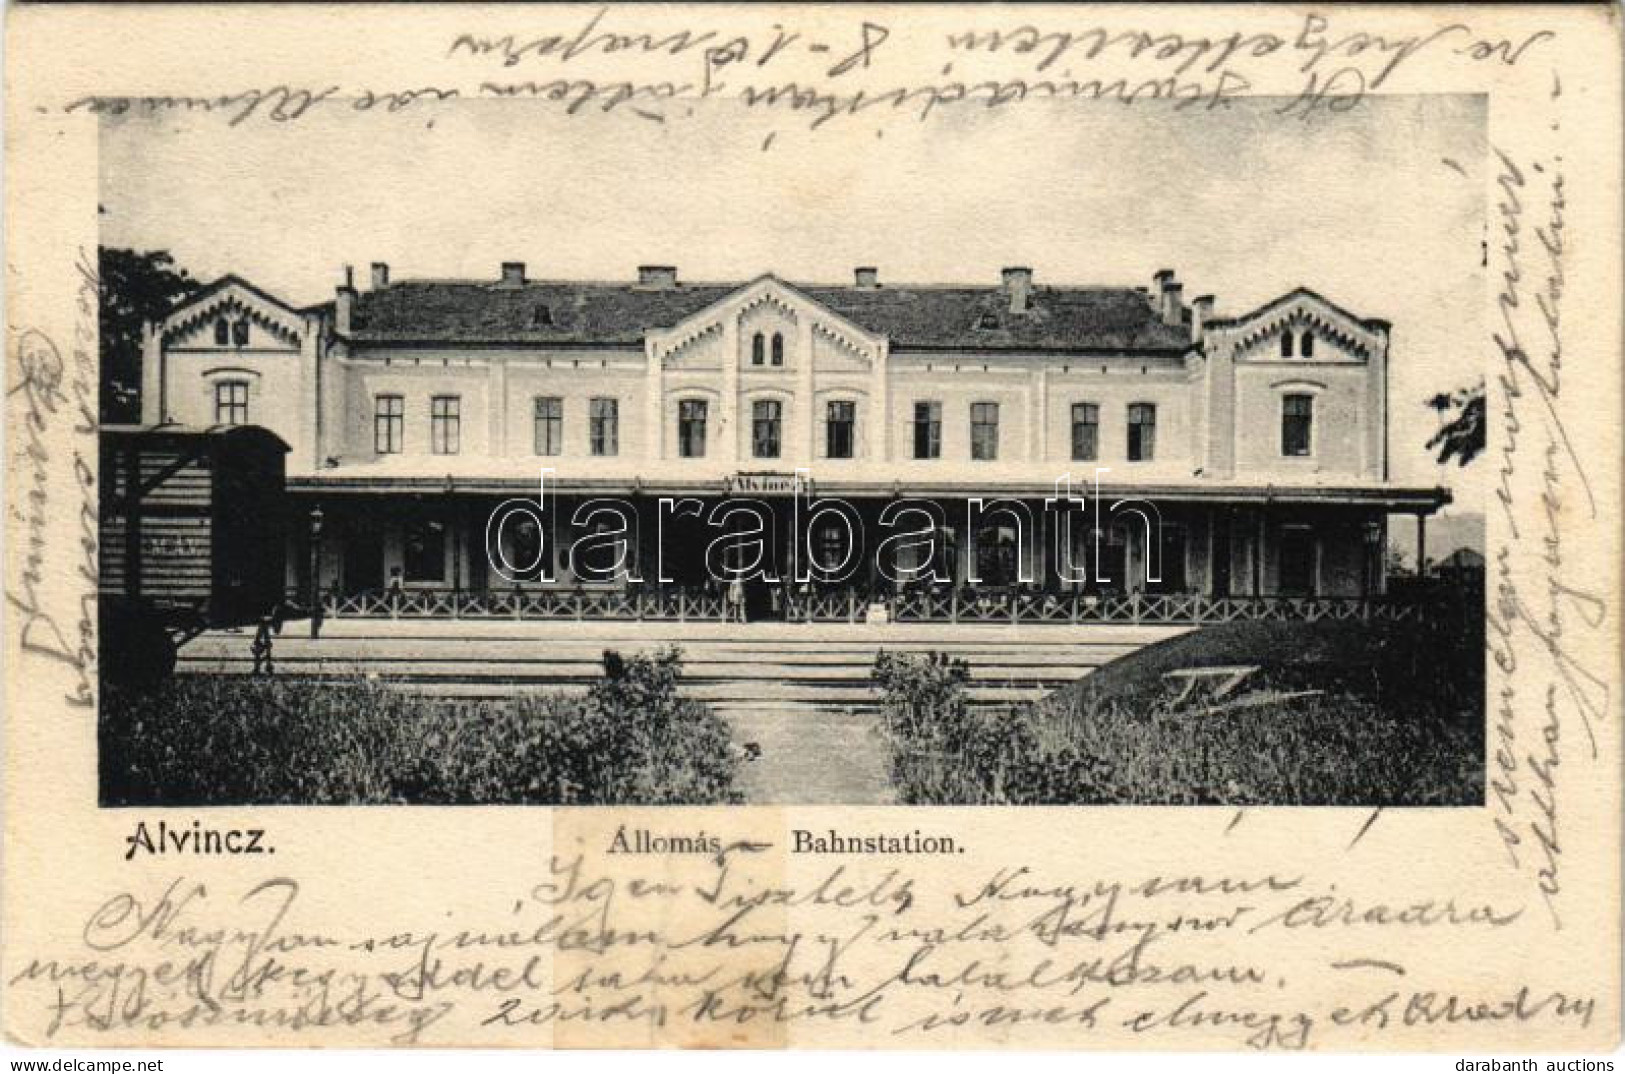 T4 1905 Alvinc, Vintu De Jos; Vasútállomás, MÁV Vagon / Bahnstation / Railway Station, Wagon (r) - Unclassified